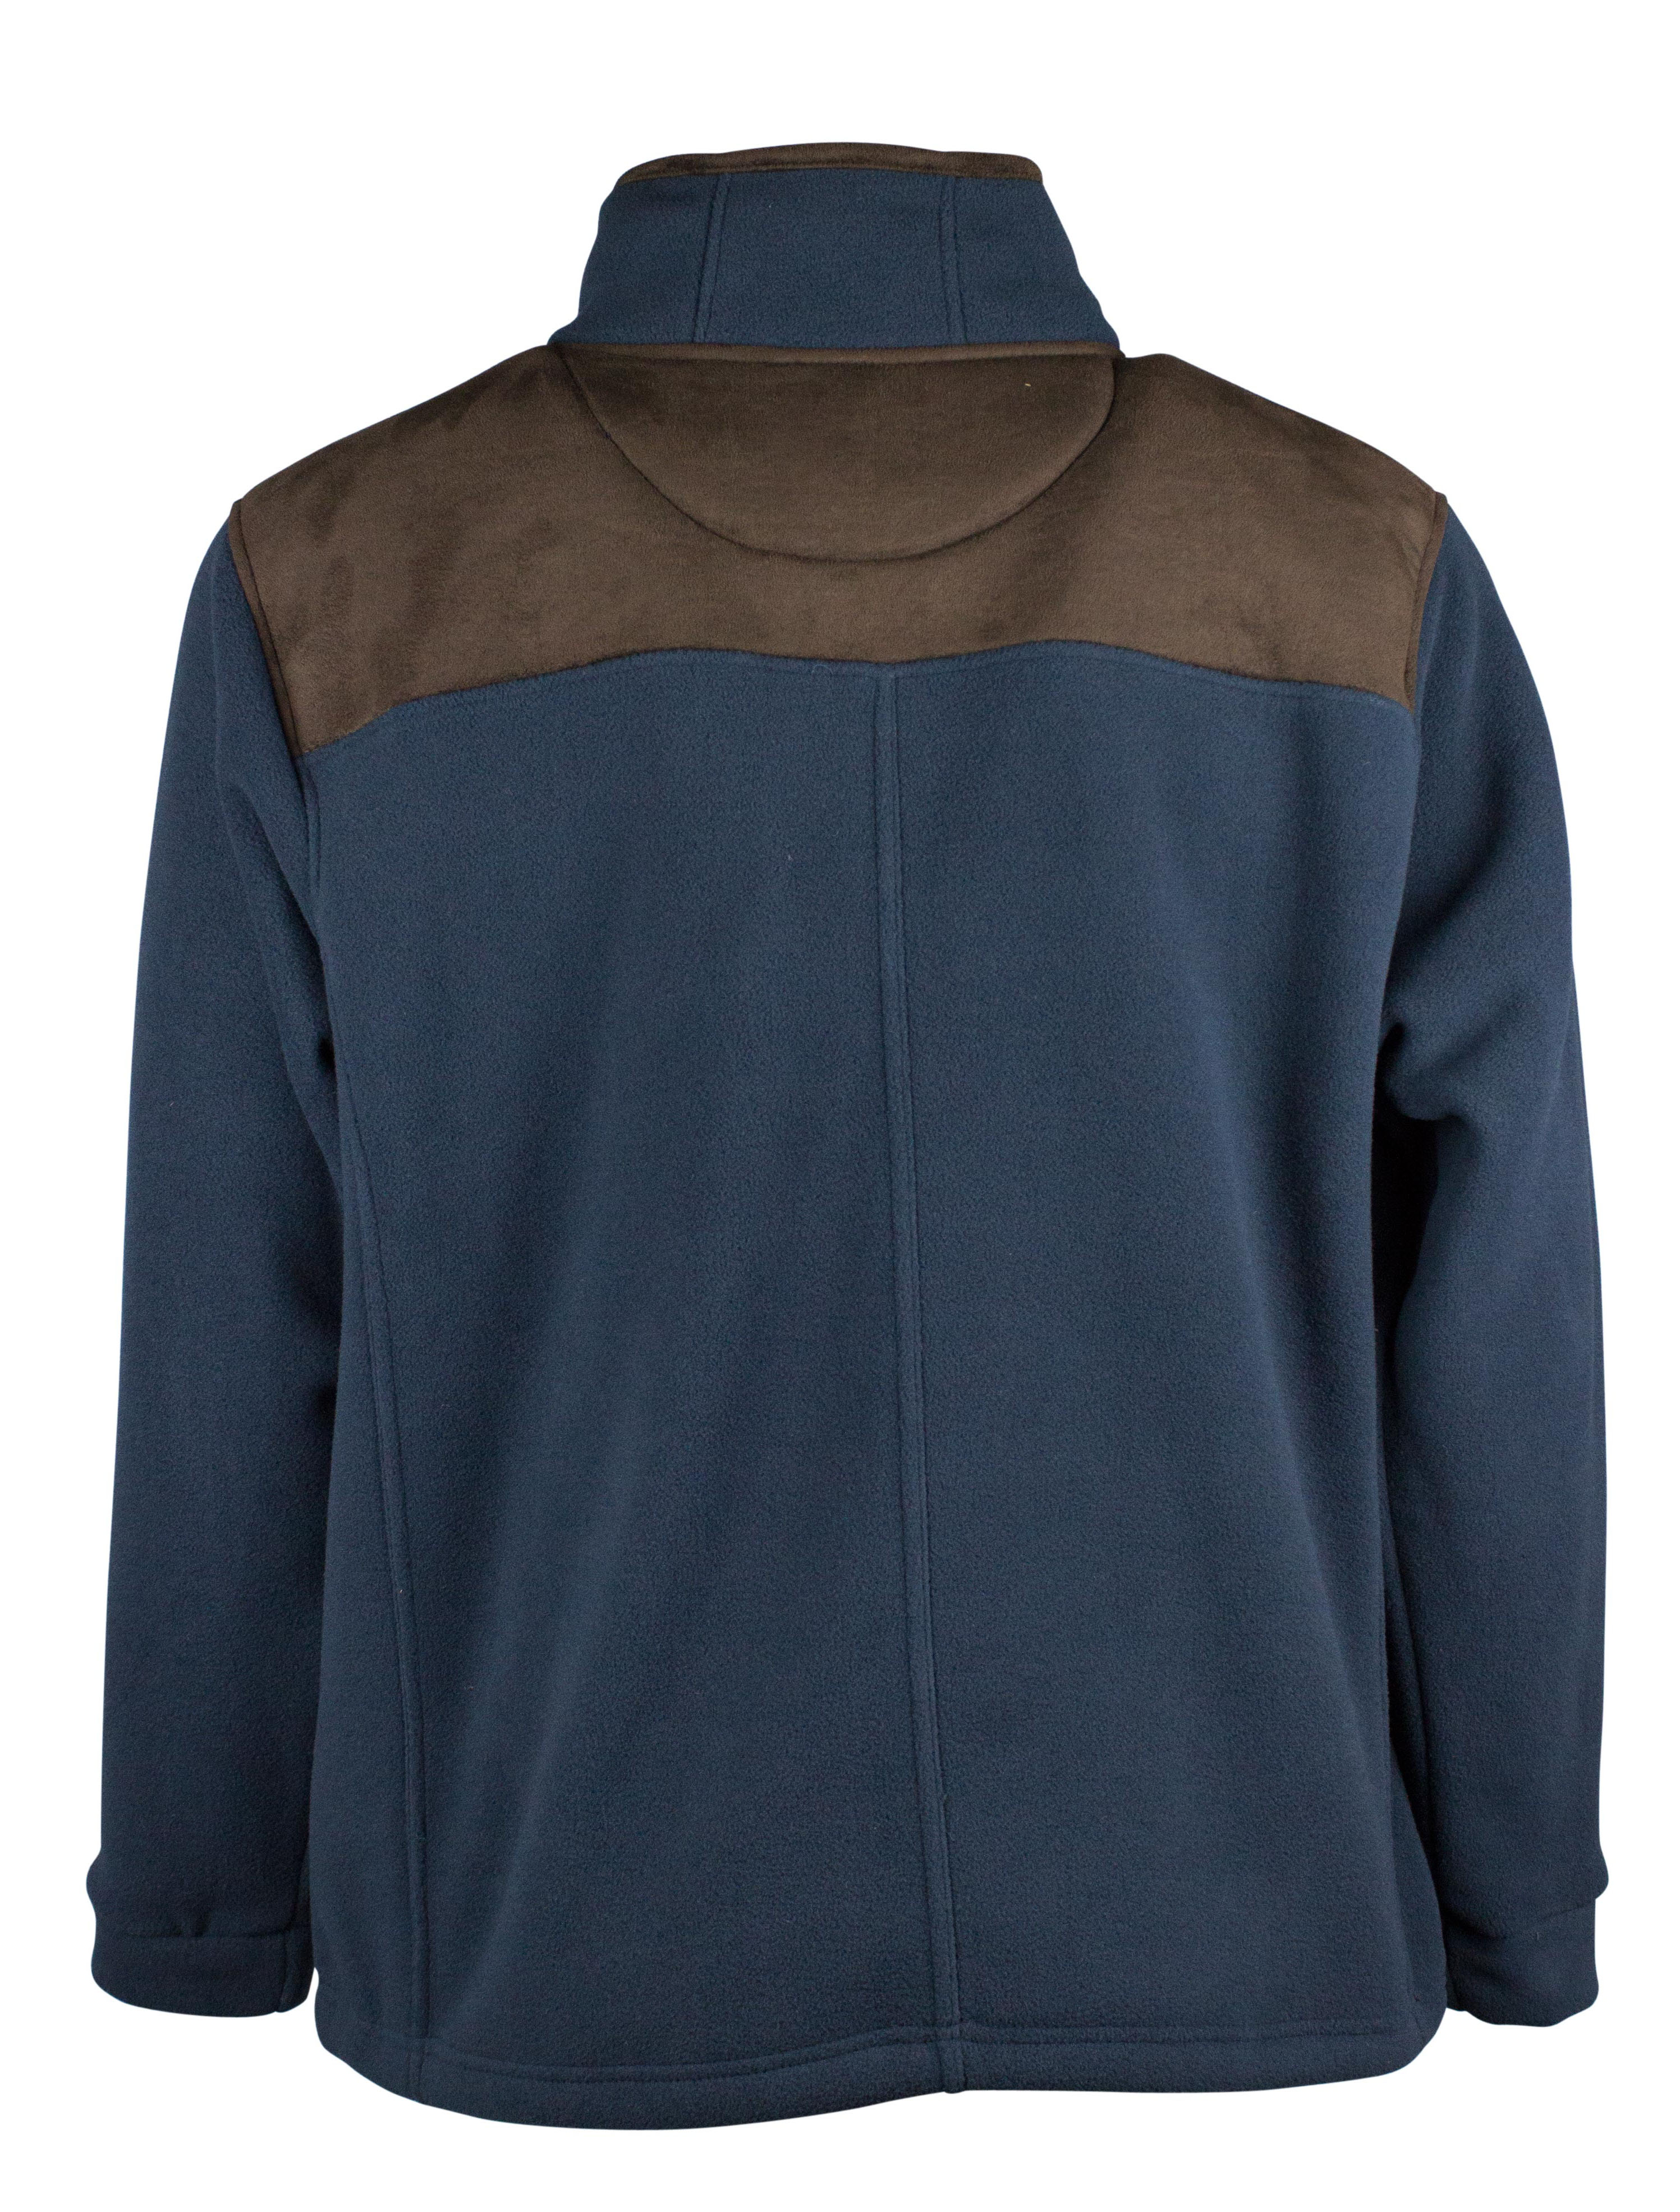 MF105 - Mens Bonded Full Zip Fleece Jacket - NAVY - Oxford Blue